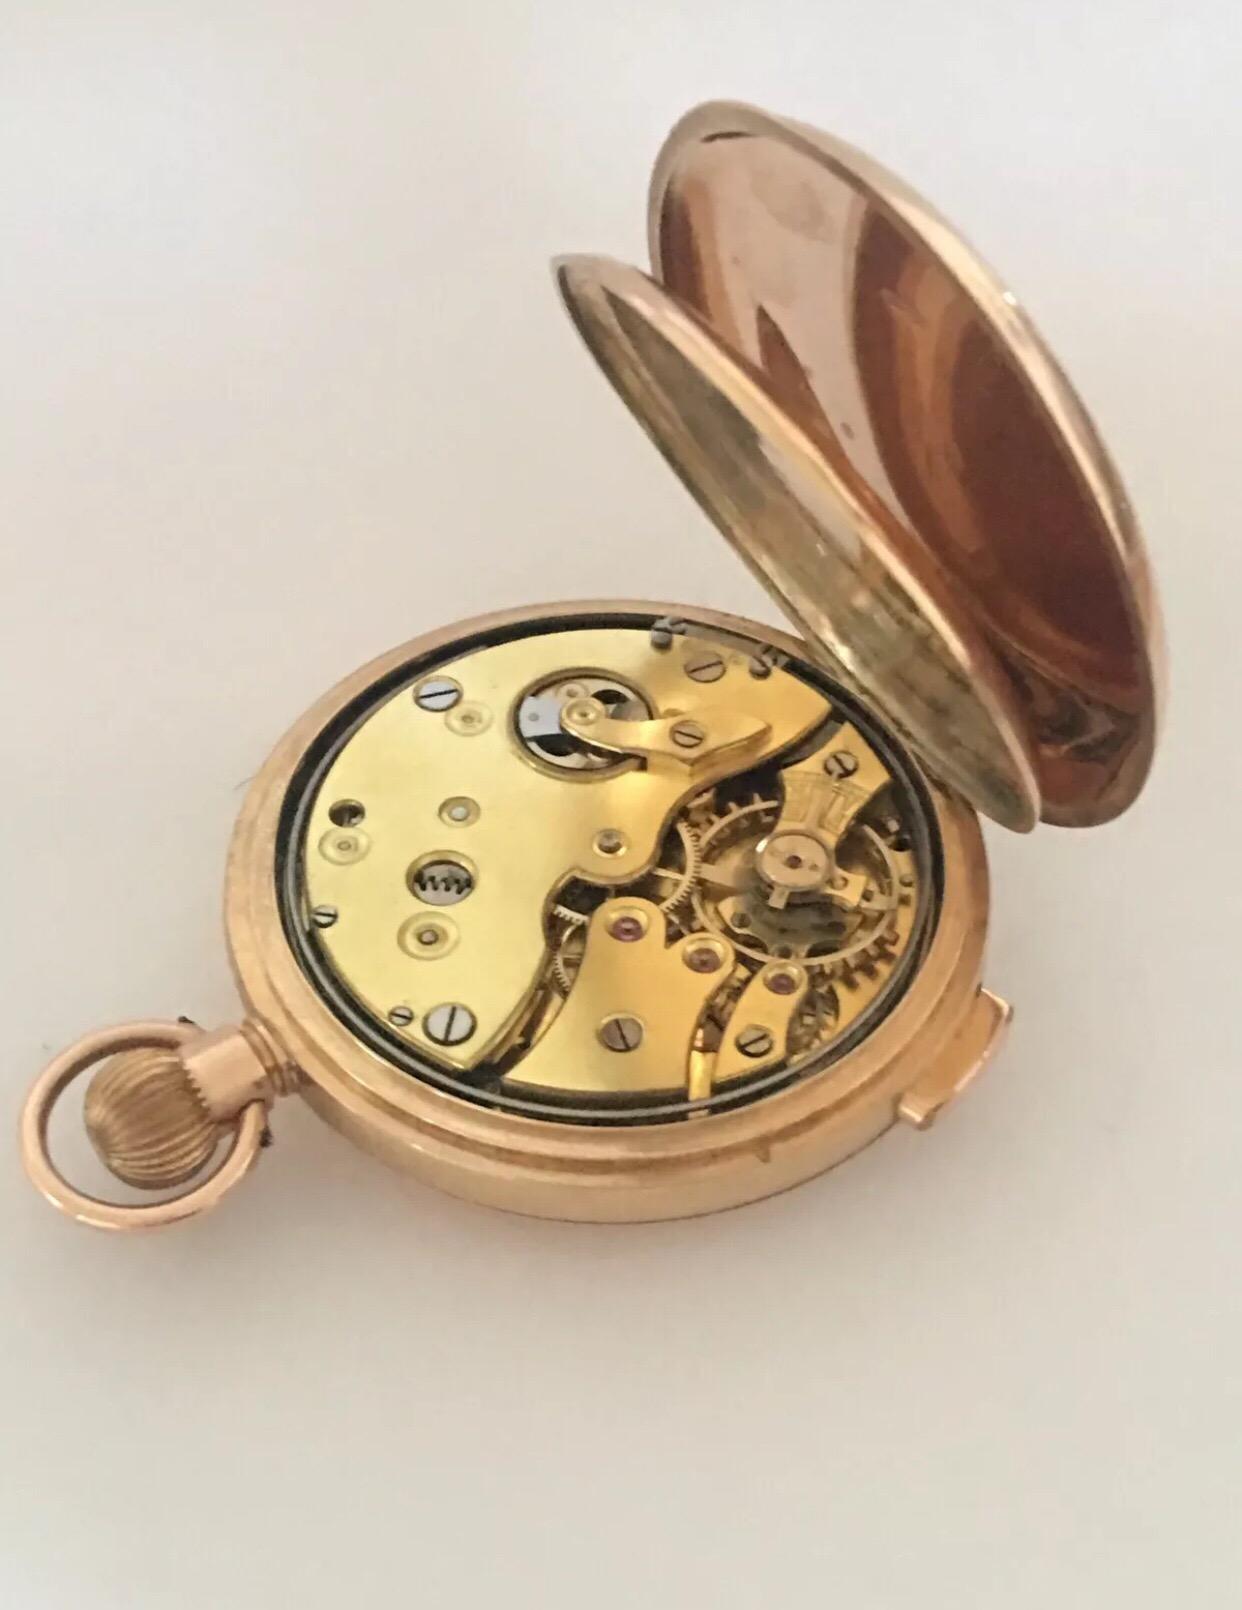 9 Karat Gold Full Hunter Quarter Repeater Pocket Watch Signed the Vigilant Watch For Sale 6